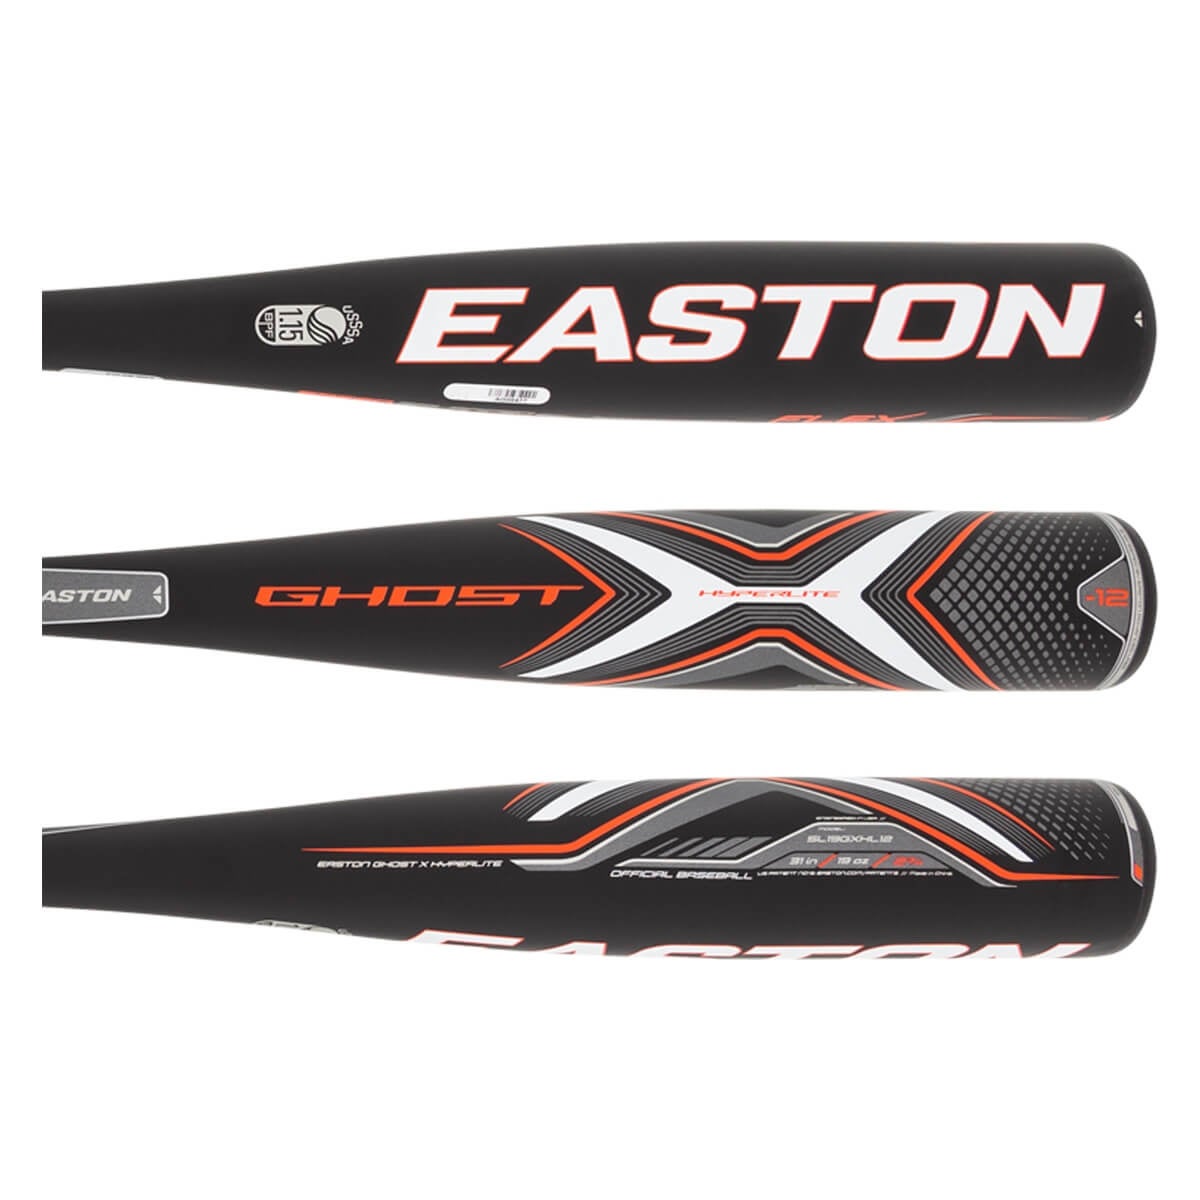 EASTON Quantum -5 USA Youth Baseball Bat YBB21QUAN5 1 Pc Aluminum Big Barrel 